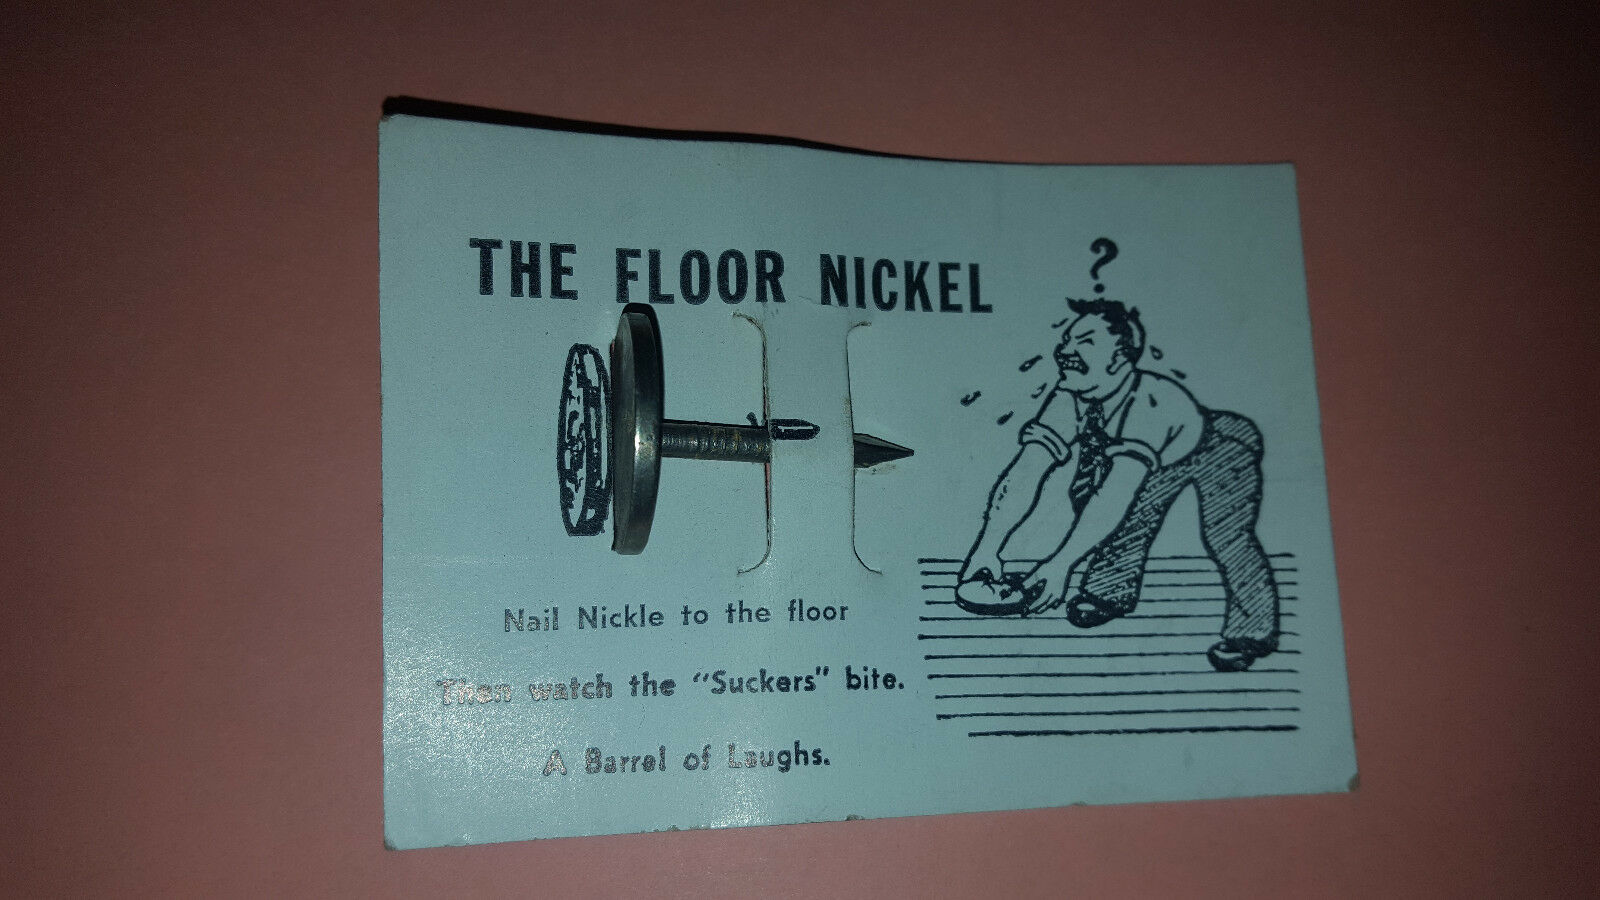 1940s-VINTAGE-NICKEL-COIN-NOVELTY-THE-FLOOR-NICKEL.jpg